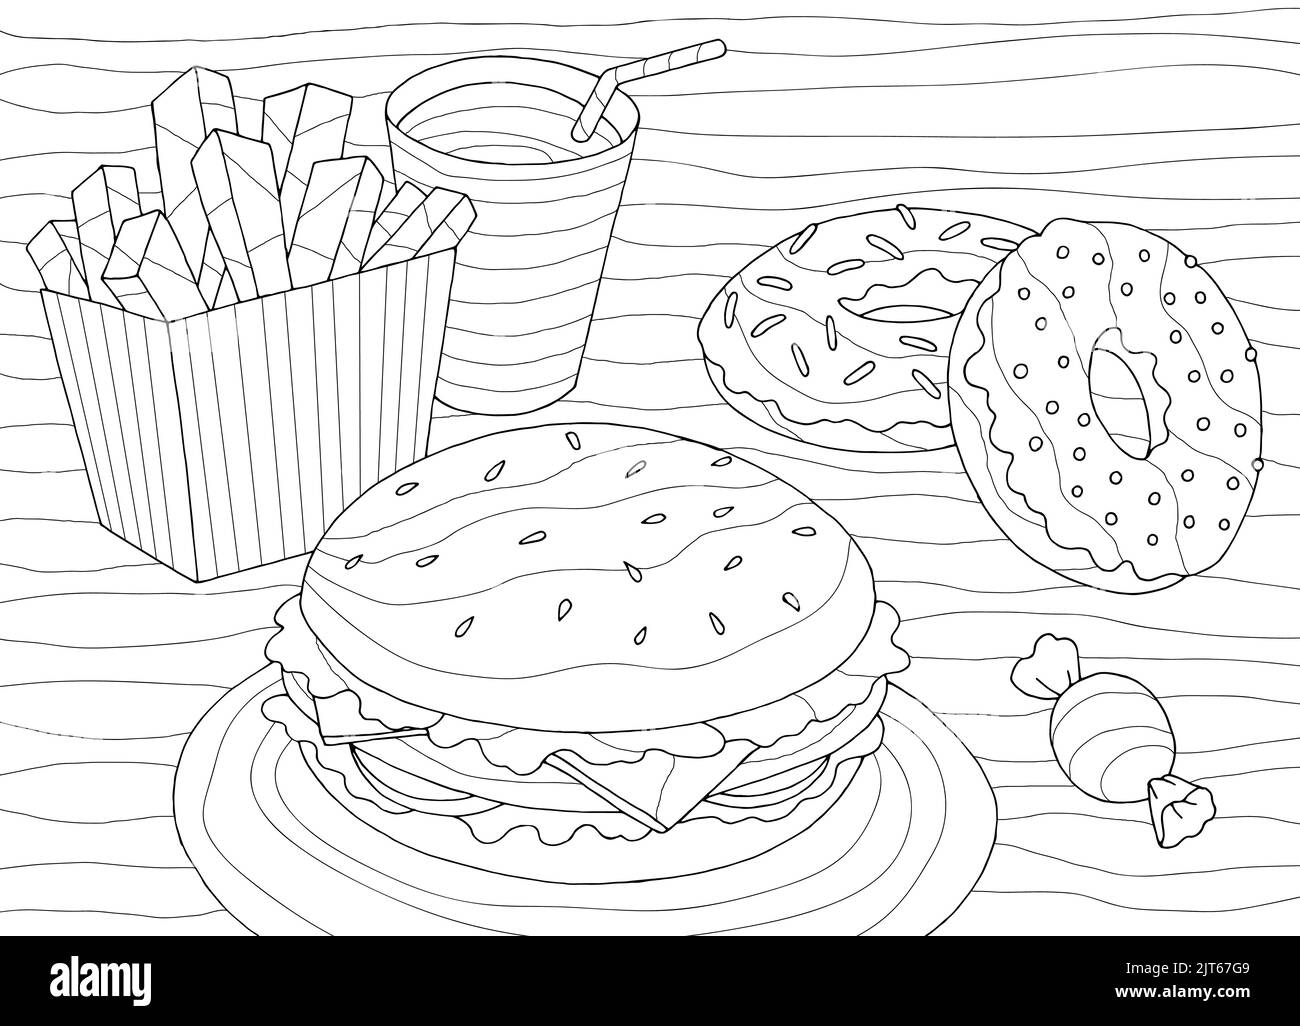 Fast Food Färbung Grafik schwarz weiß Skizze Illustration Vektor Stock Vektor